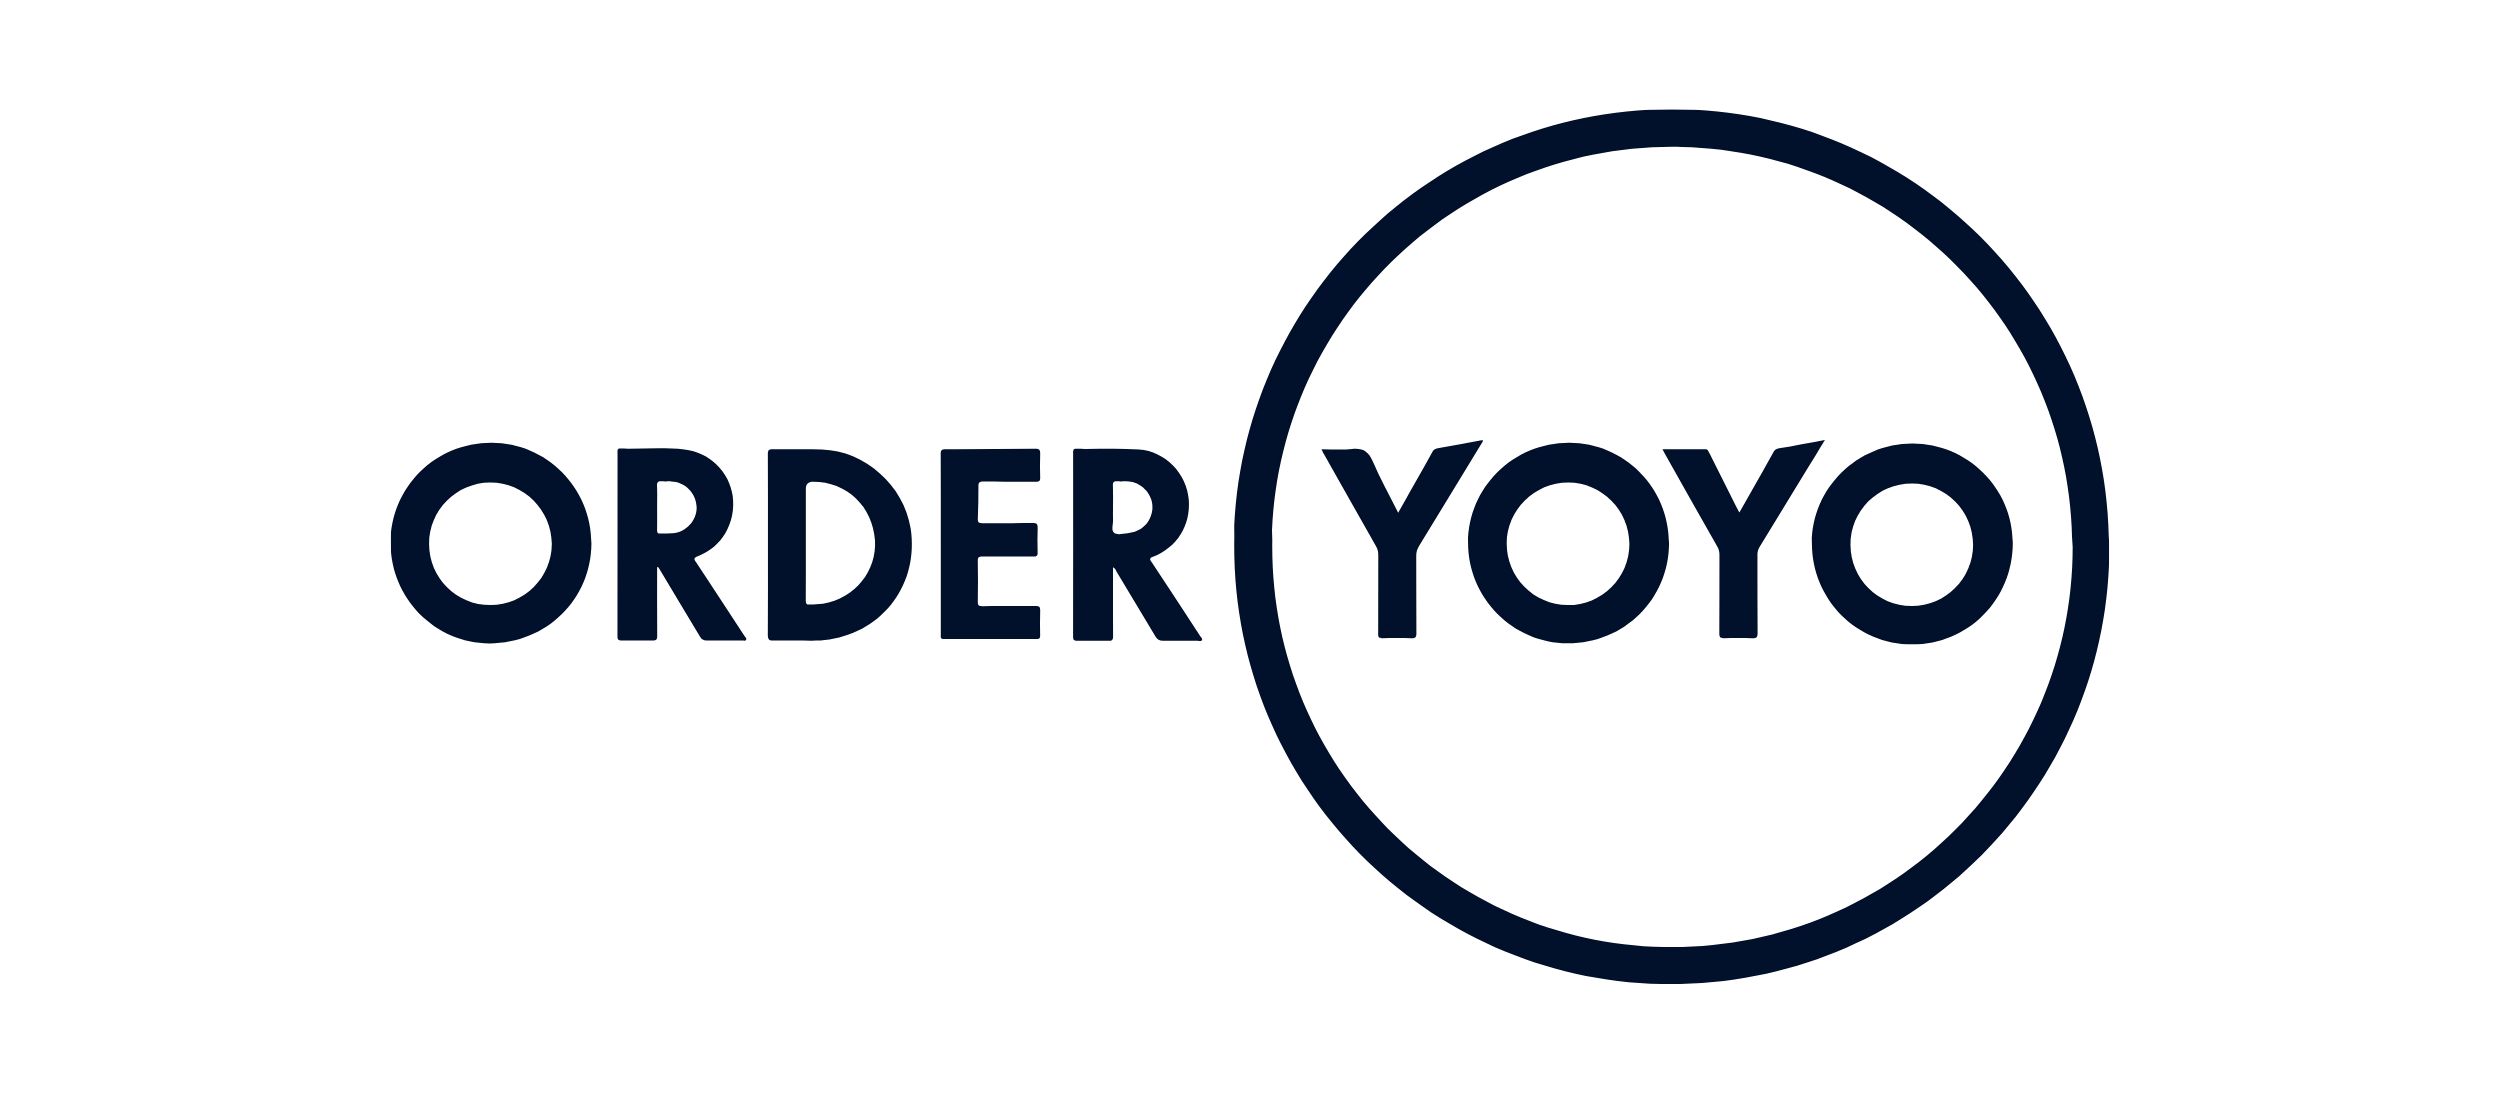 Order YOYO